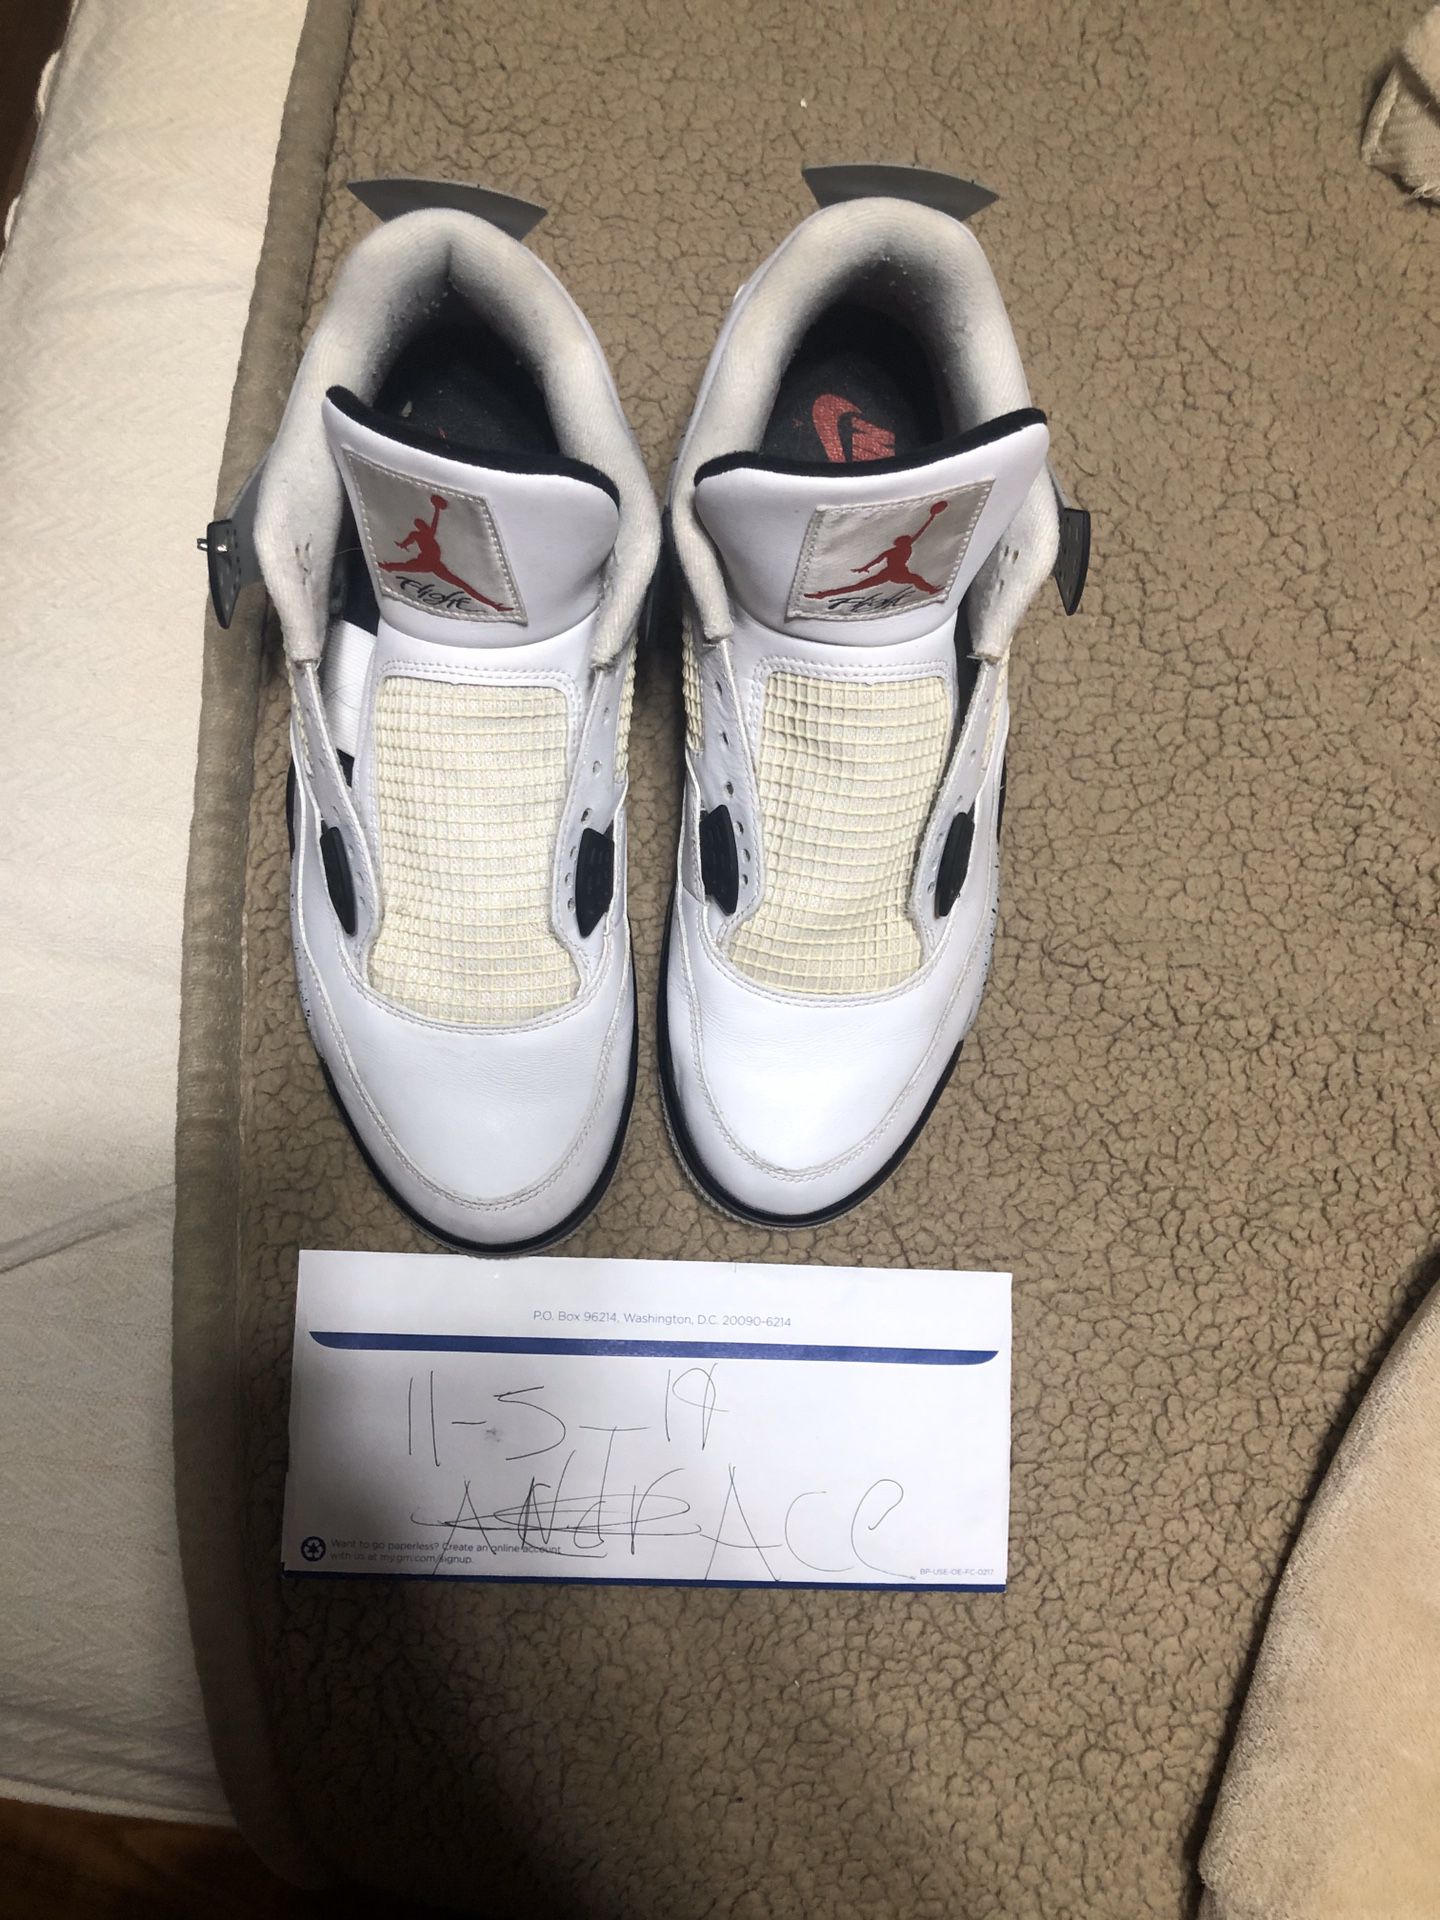 Nike Air Jordan Retro 4 white cement size 13